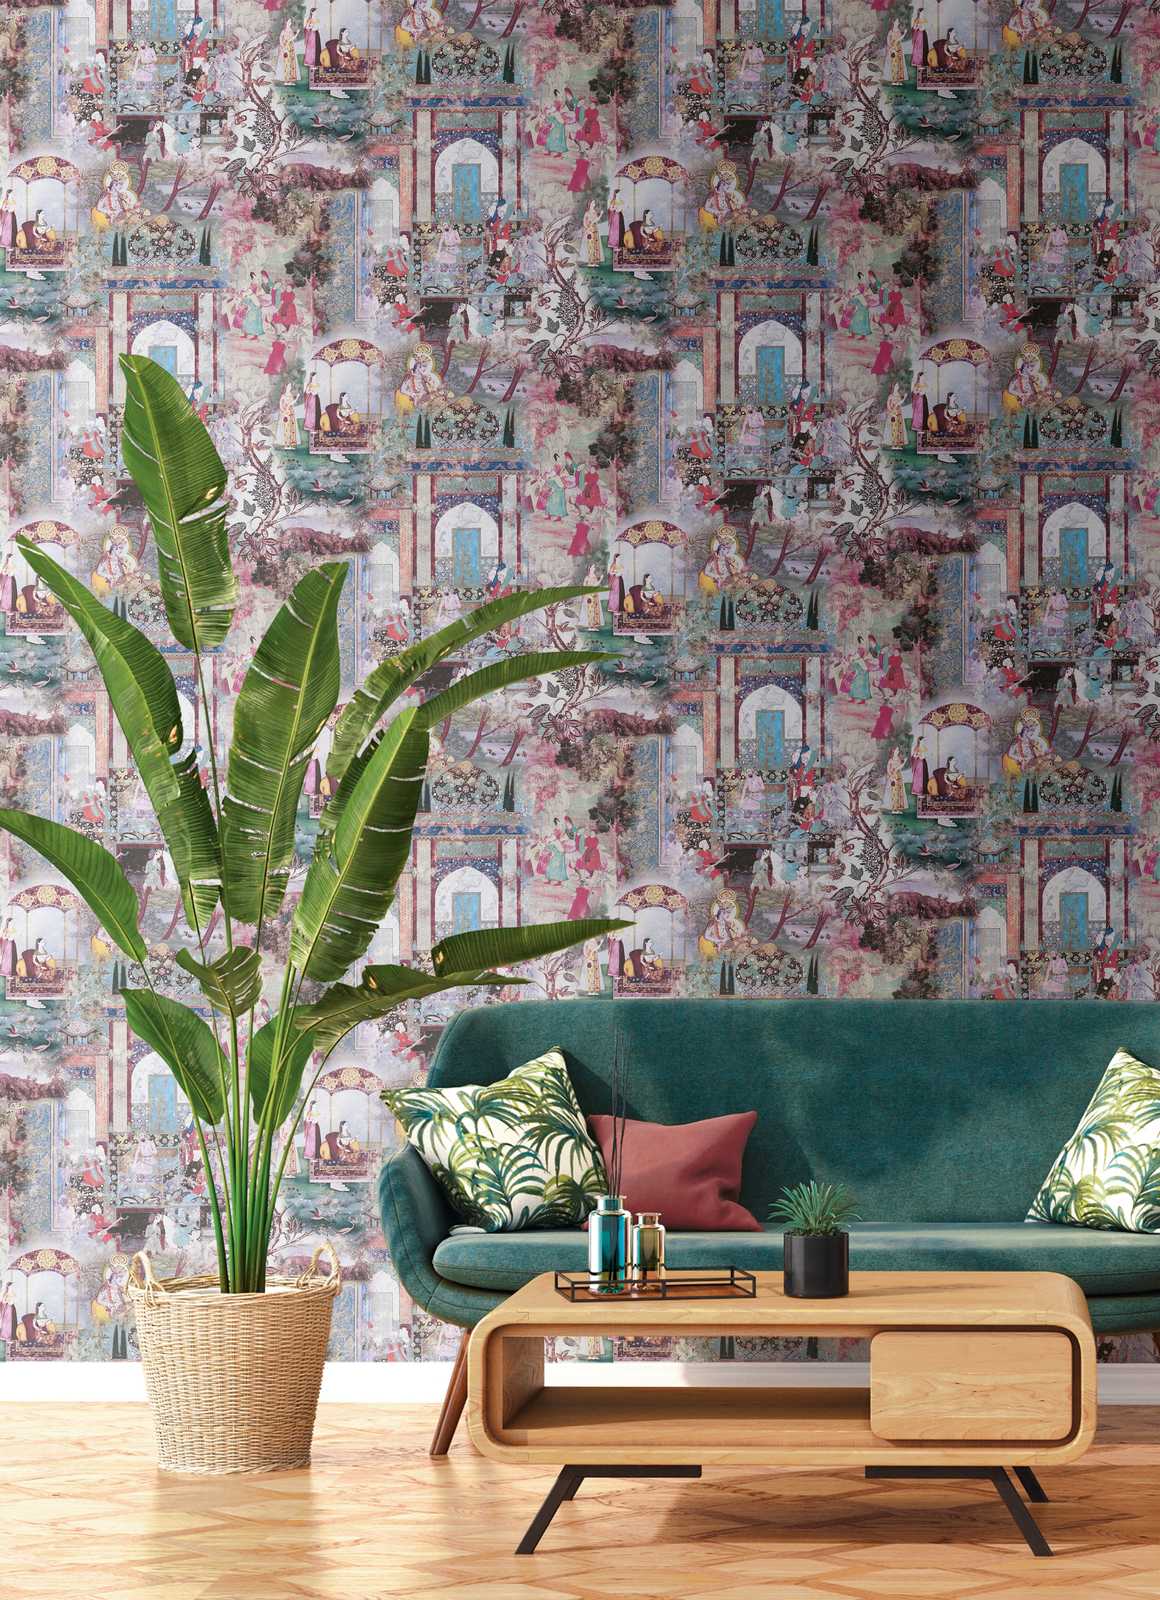             Motif wallpaper vintage ethnic design - colourful, green
        